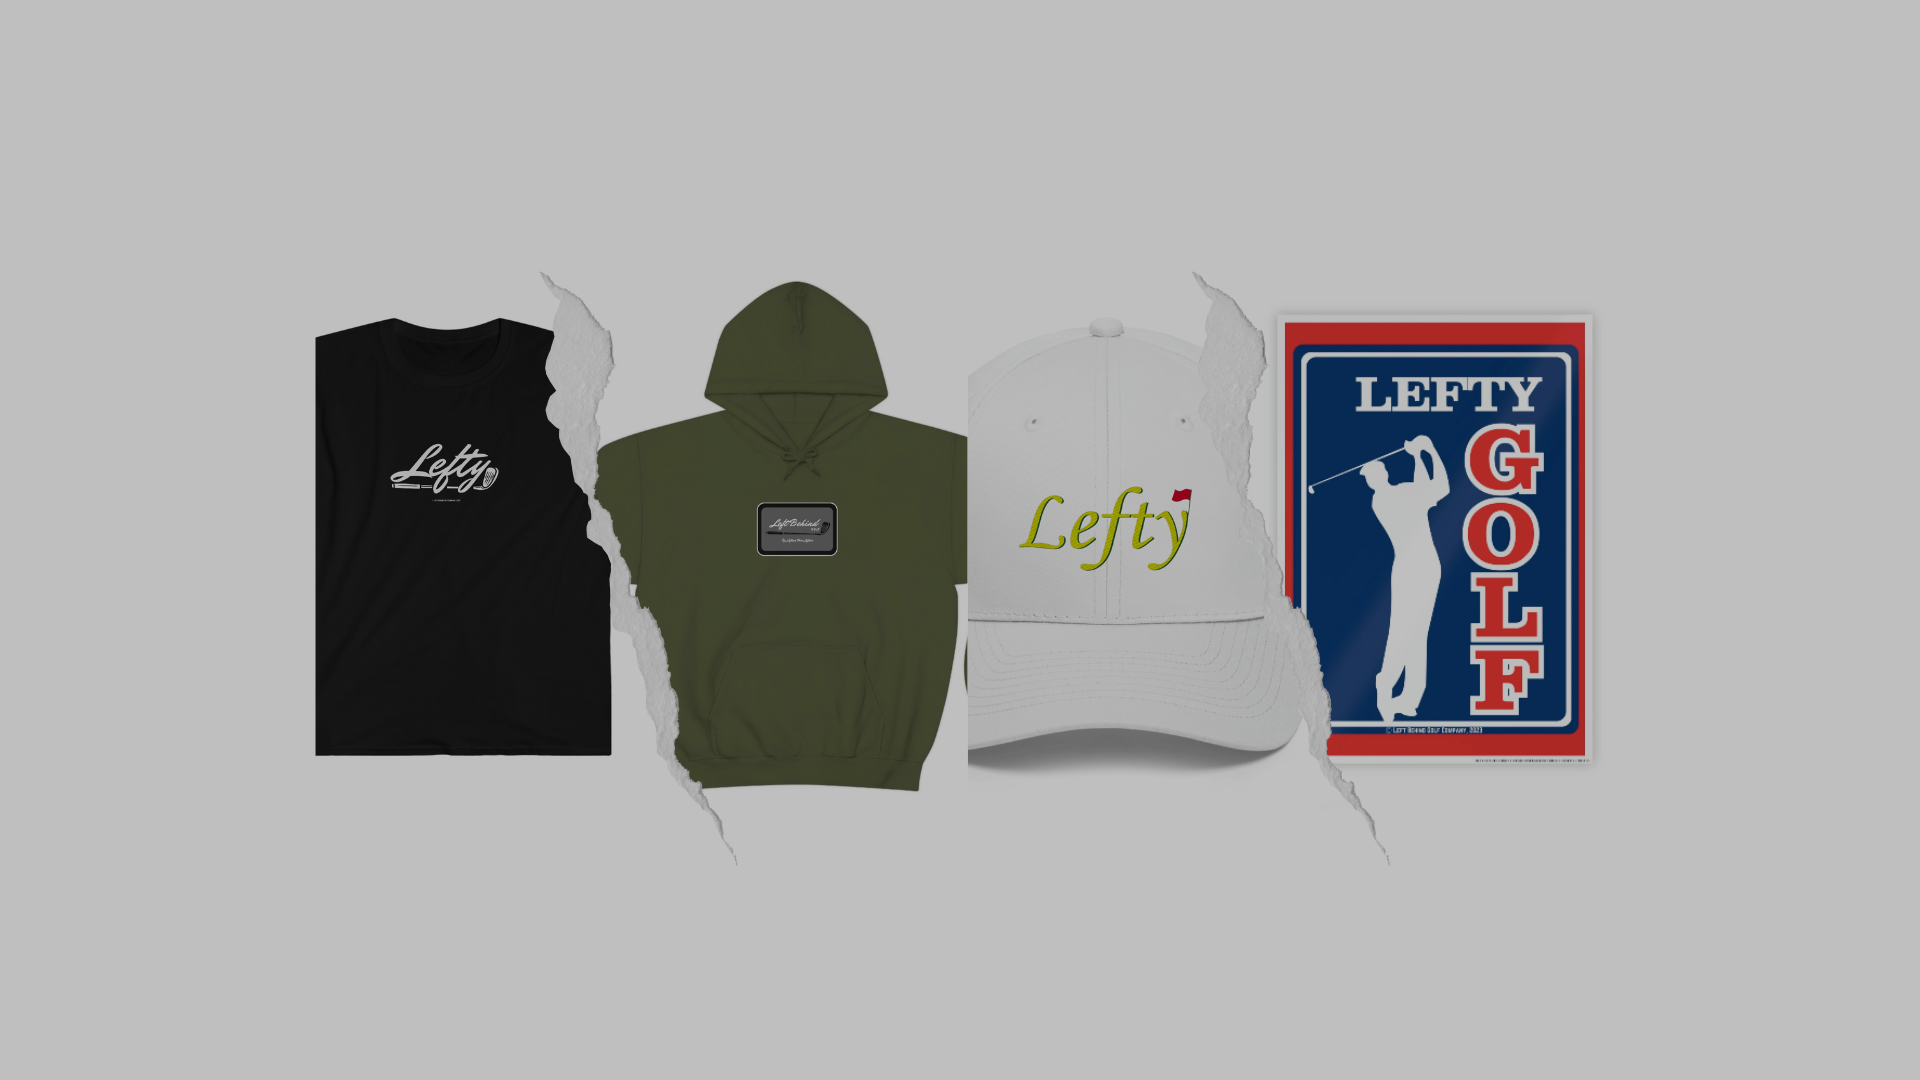 Lefty Merch – Left Behind Golf Company